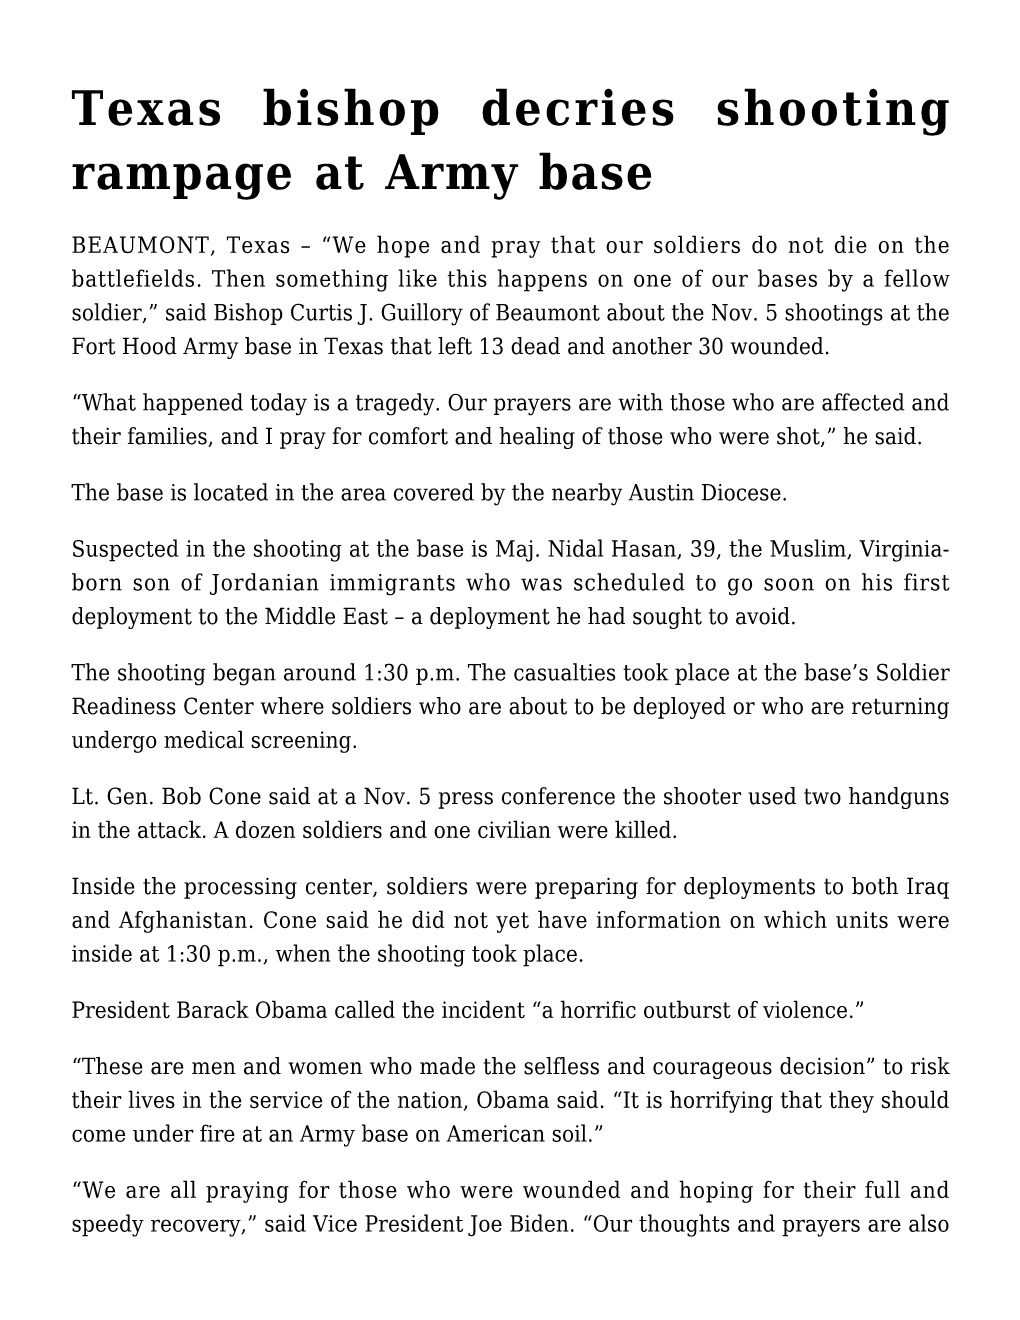 Texas Bishop Decries Shooting Rampage at Army Base